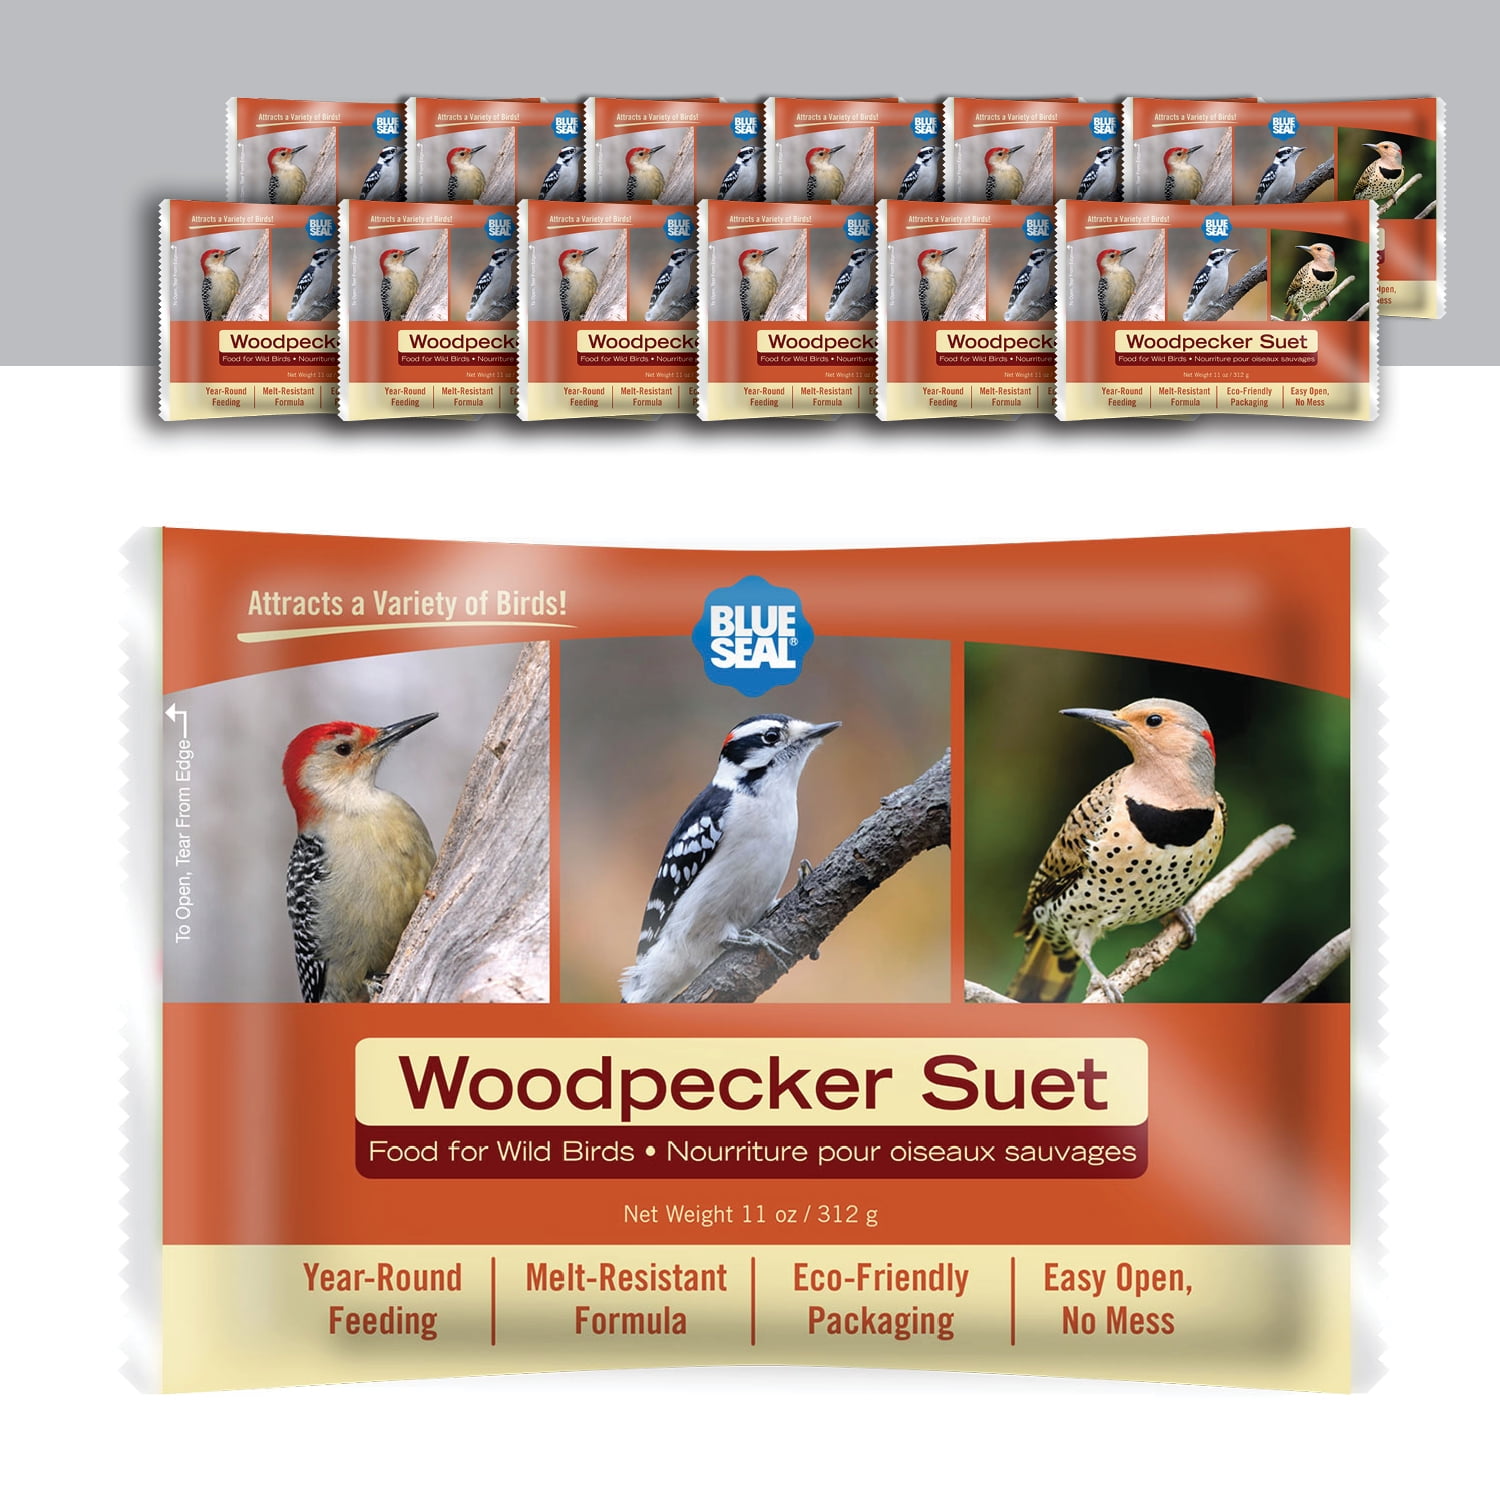 INGODI cute woodpeckers animal figure wooden toys with steel stick